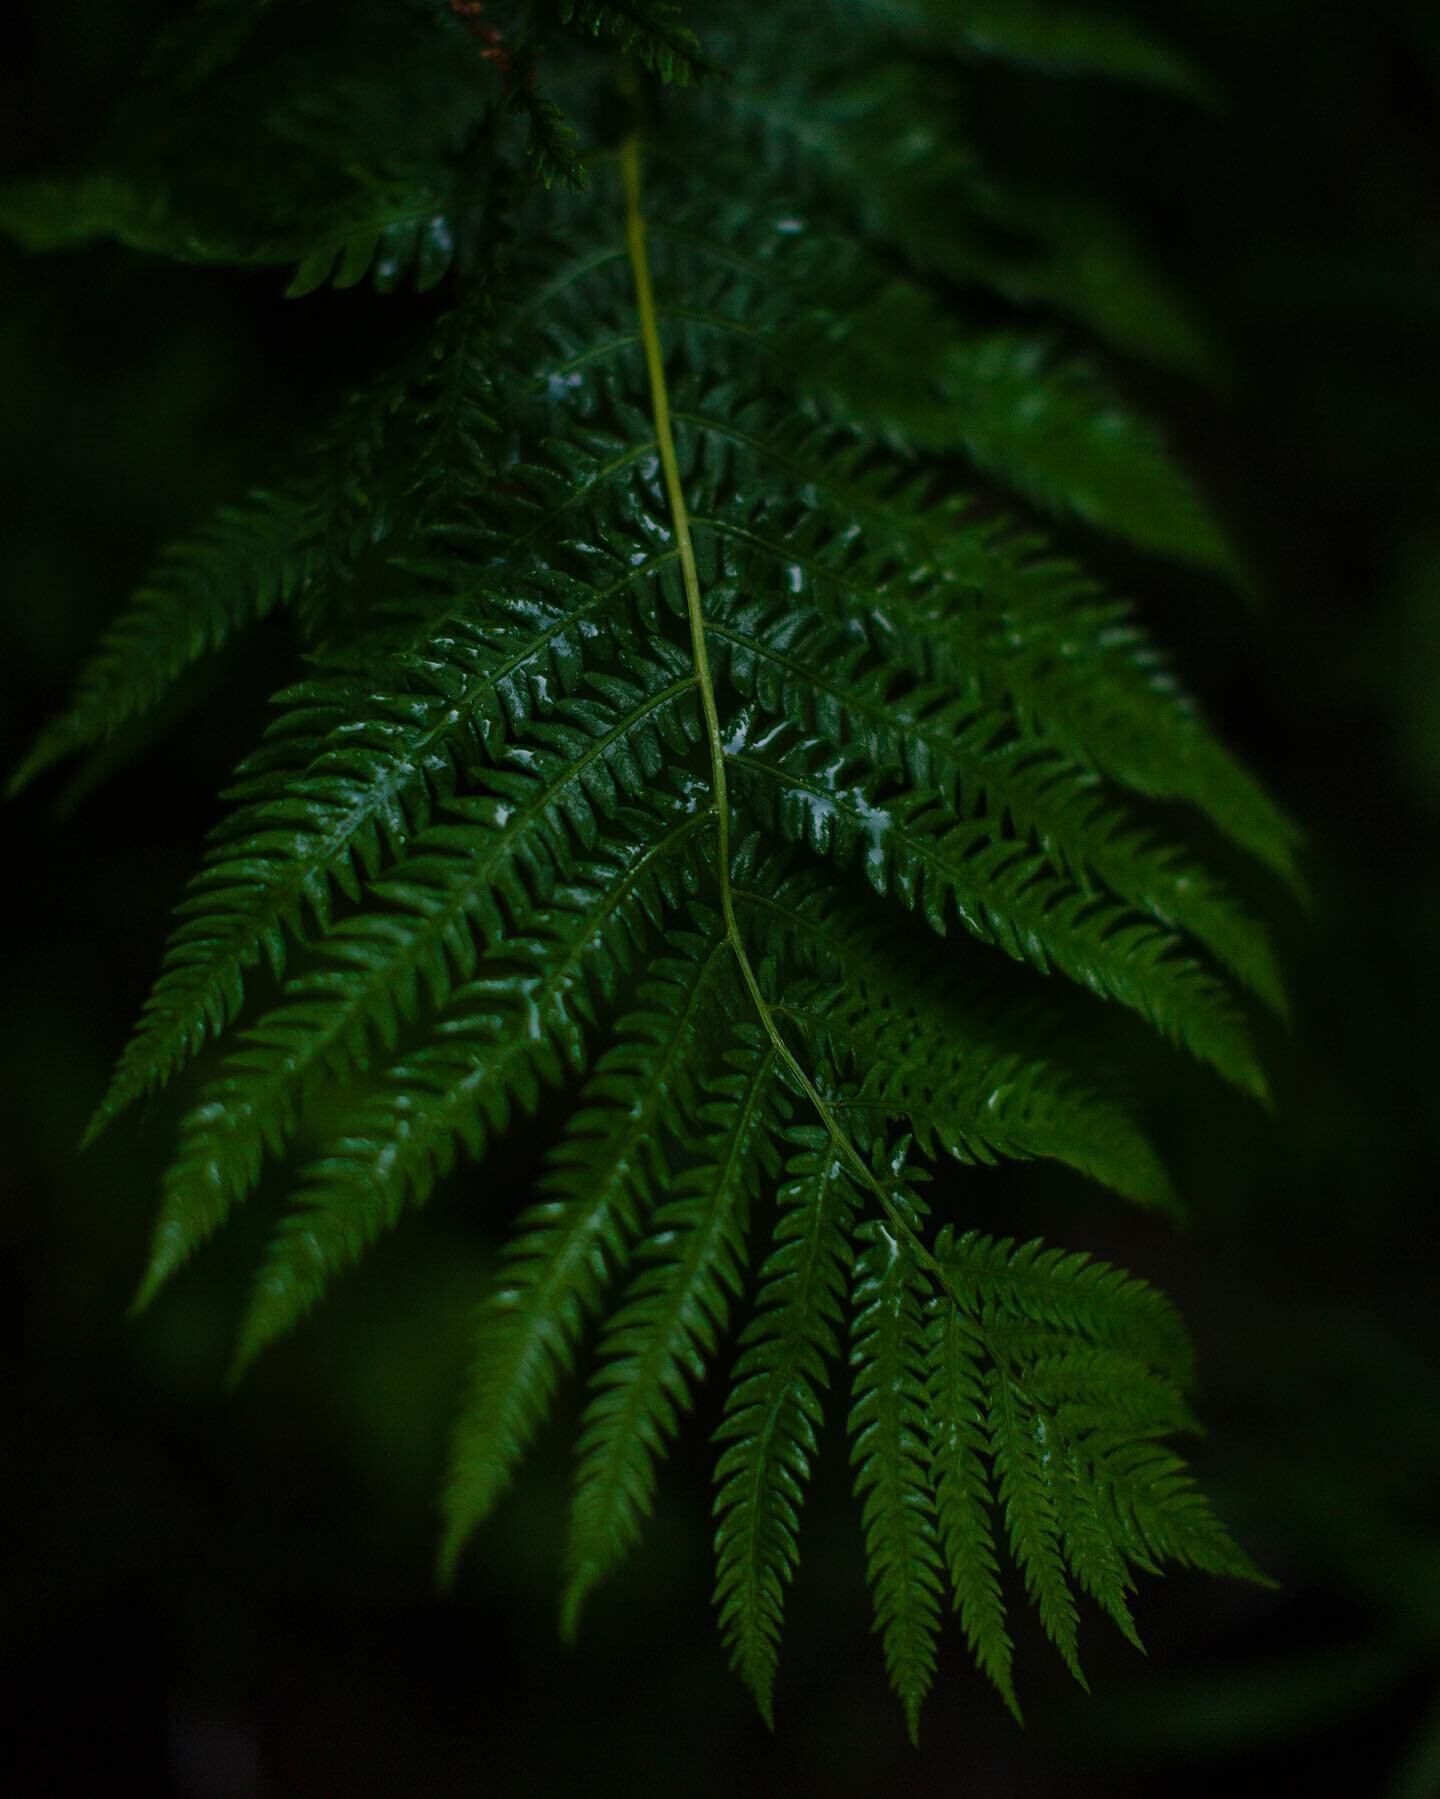 Dusk in the rainy forest yesterday. 🌿🌧

#memorialdayweekend #hudsonvalley #fern #forest #shotoncanon